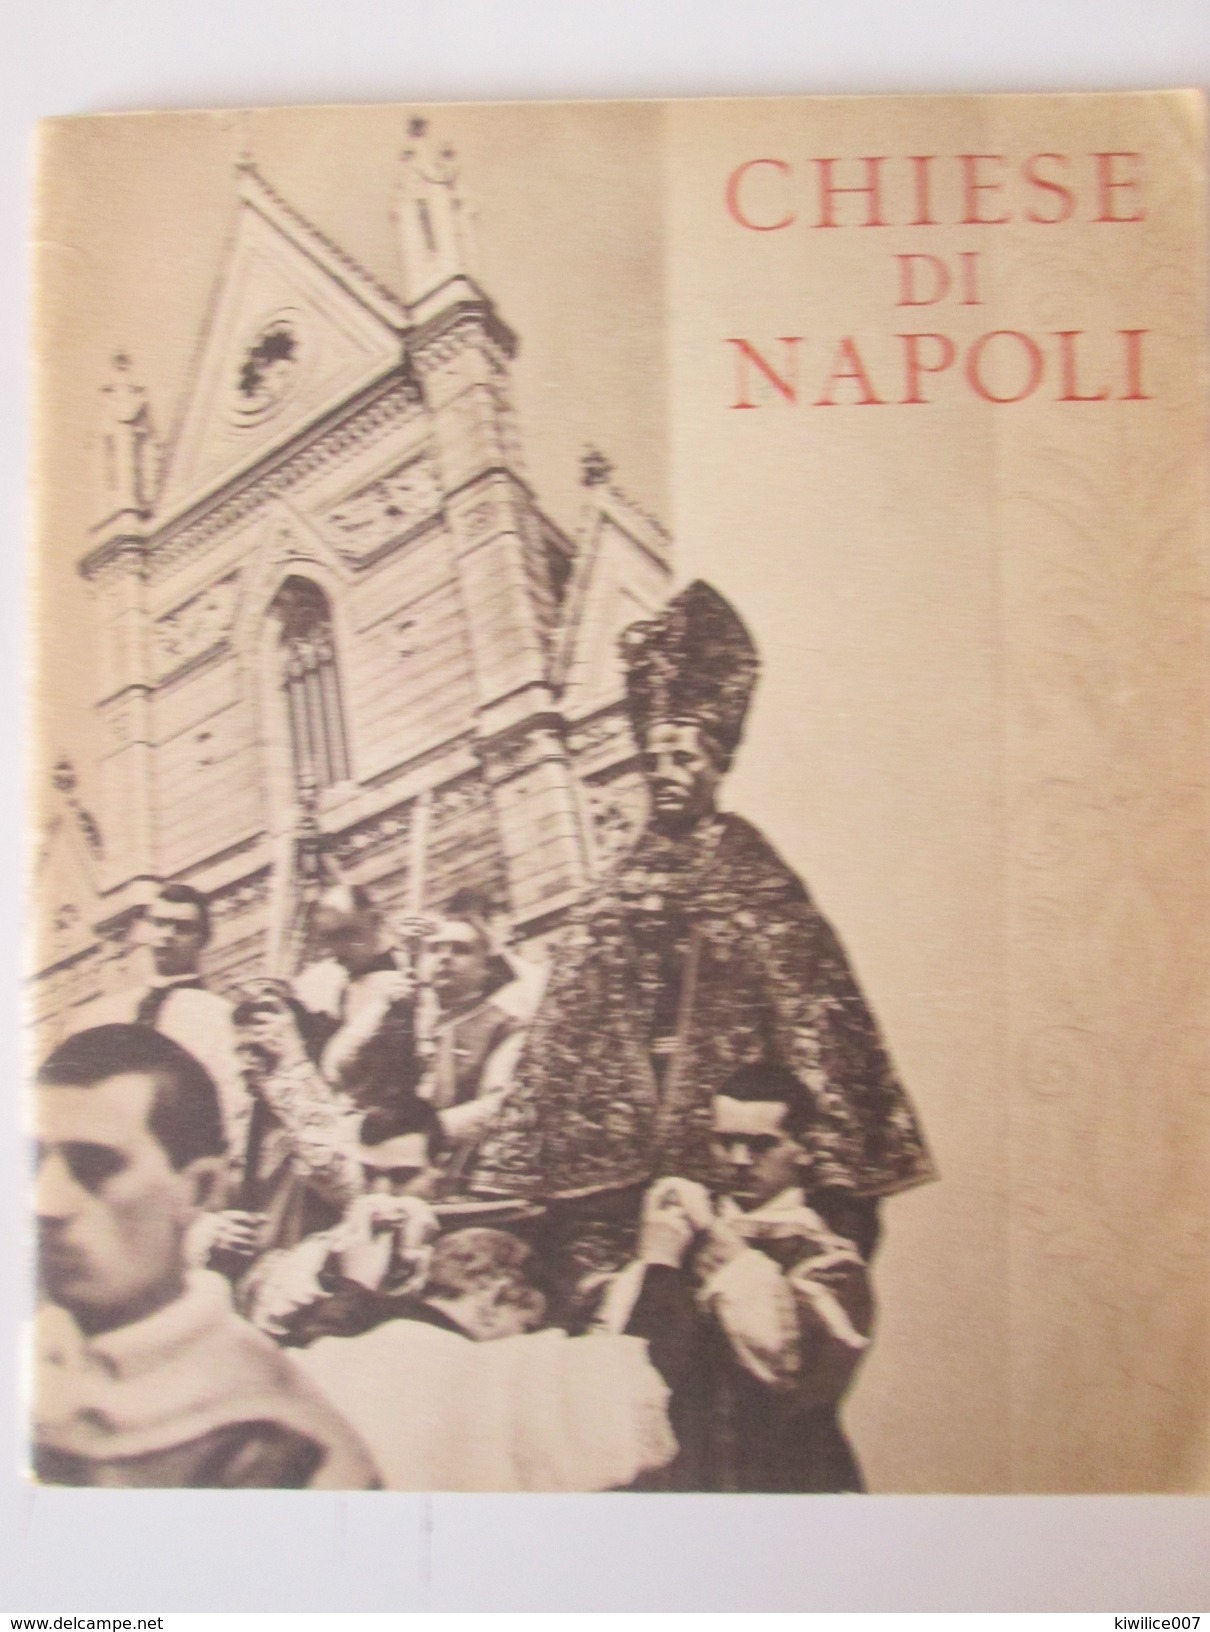 1939  CHIESE DI NAPOLI  Naples Italie Italia - Livres Anciens